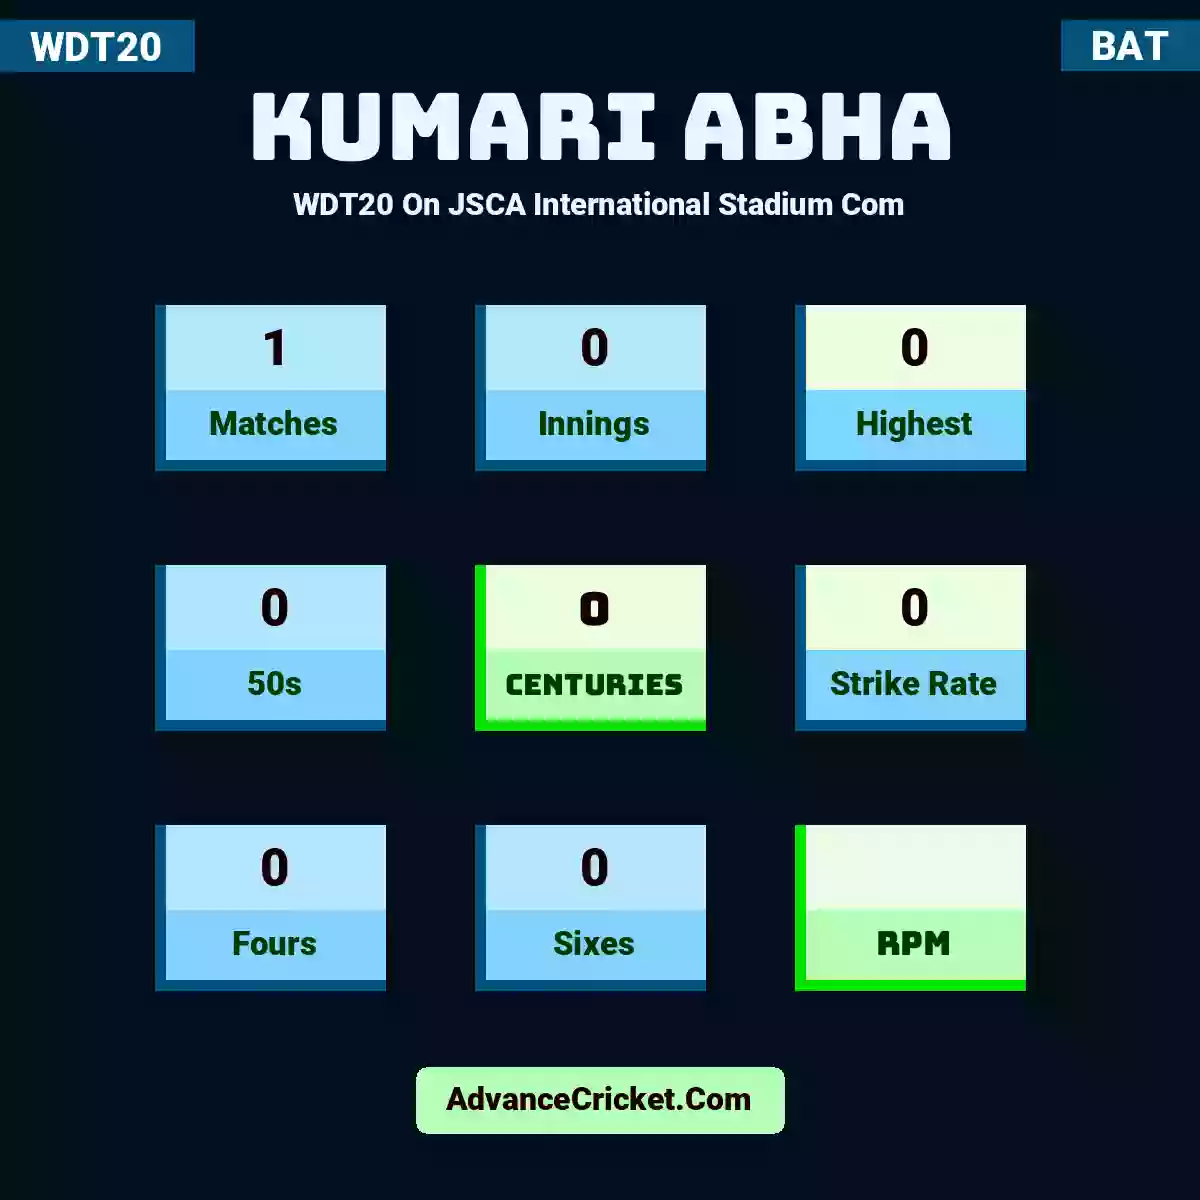 Kumari Abha WDT20  On JSCA International Stadium Com, Kumari Abha played 1 matches, scored 0 runs as highest, 0 half-centuries, and 0 centuries, with a strike rate of 0. K.Abha hit 0 fours and 0 sixes.